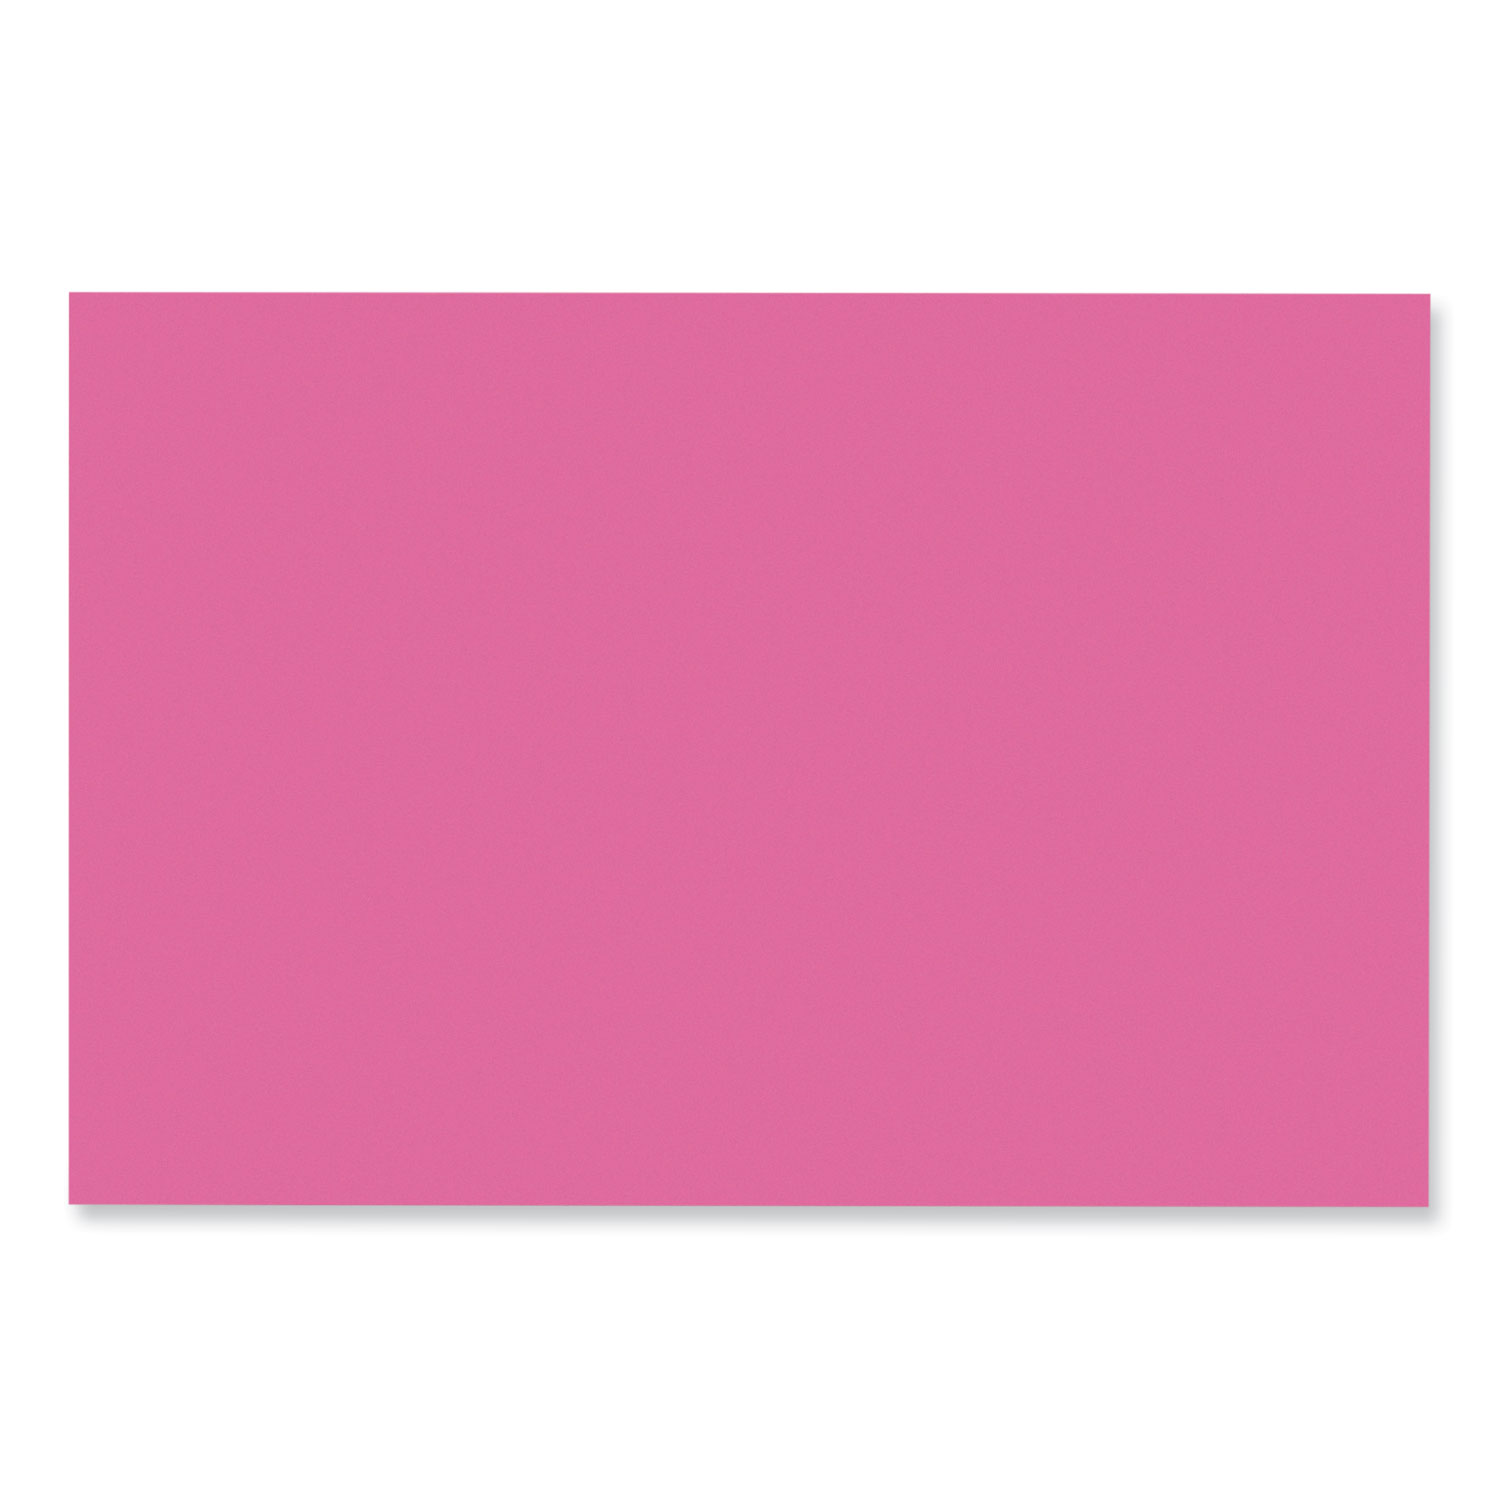 Prang 12 x 18 Construction Paper Hot Pink 50 Sheets/Pack (P9107-0001)